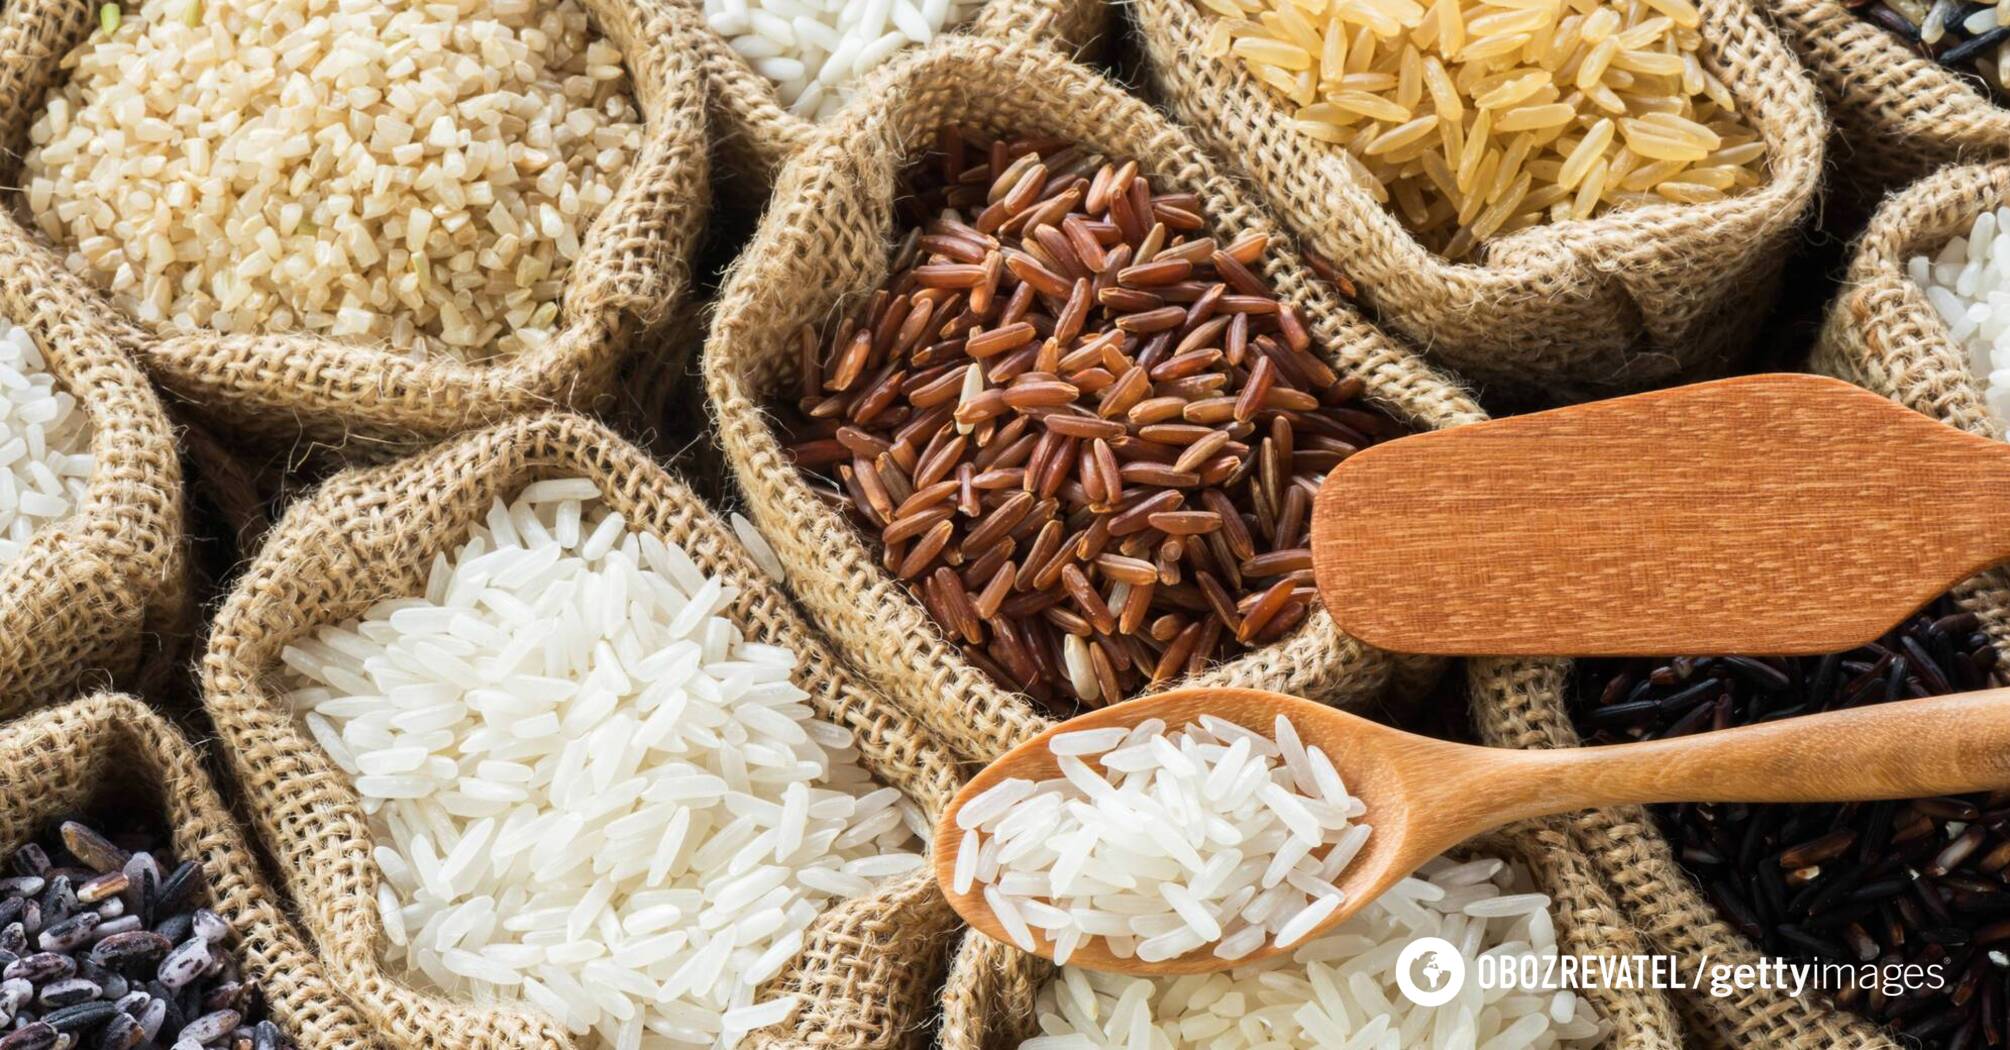 Brown rice contains more vitamin E than white rice